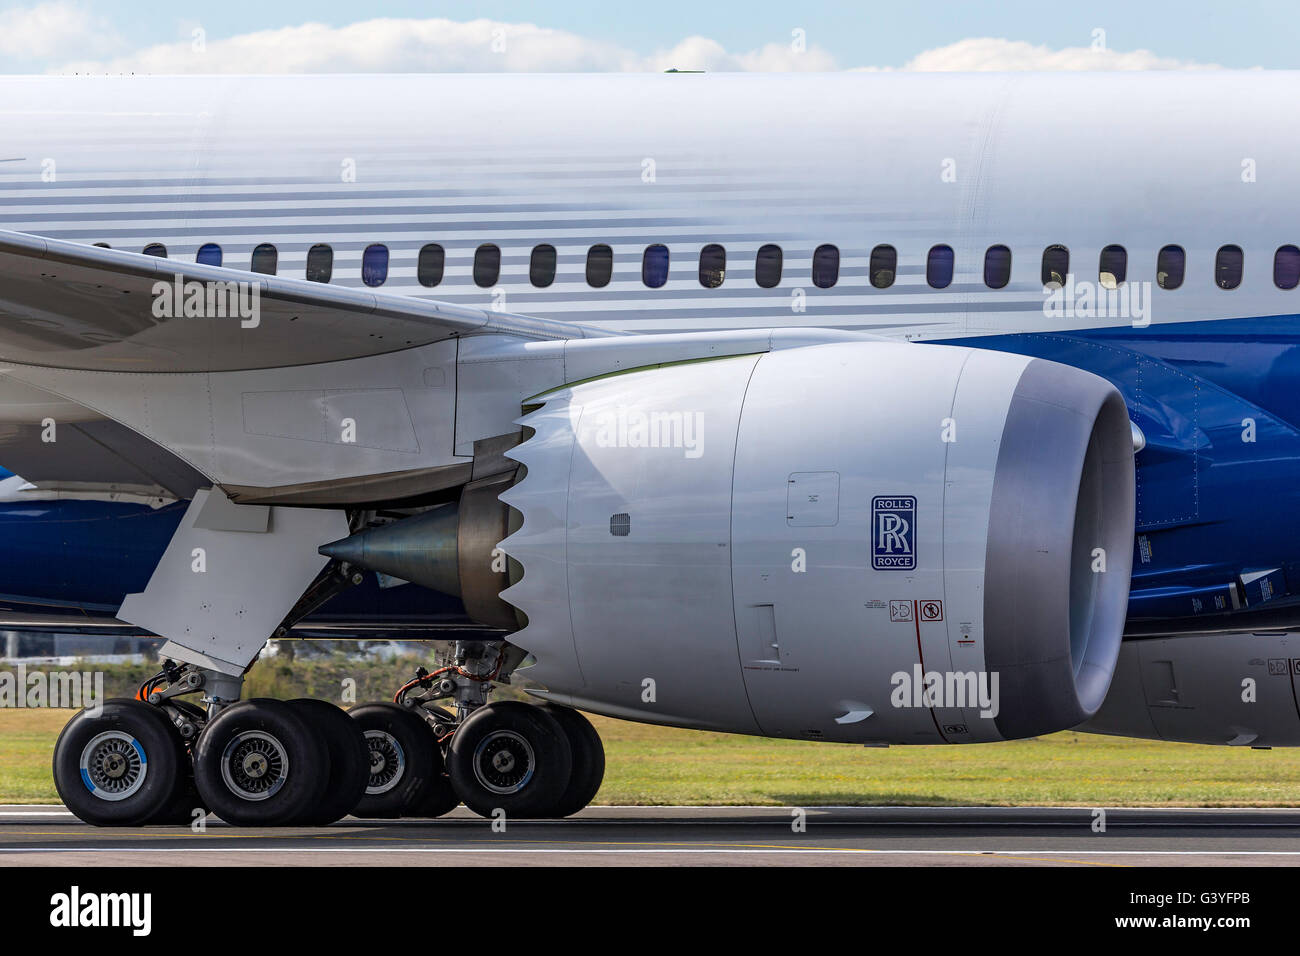 Rolls Royce Trent 1000 engines on Boeing 787-9 Dreamliner at the  Farnborough International Airshow Stock Photo - Alamy